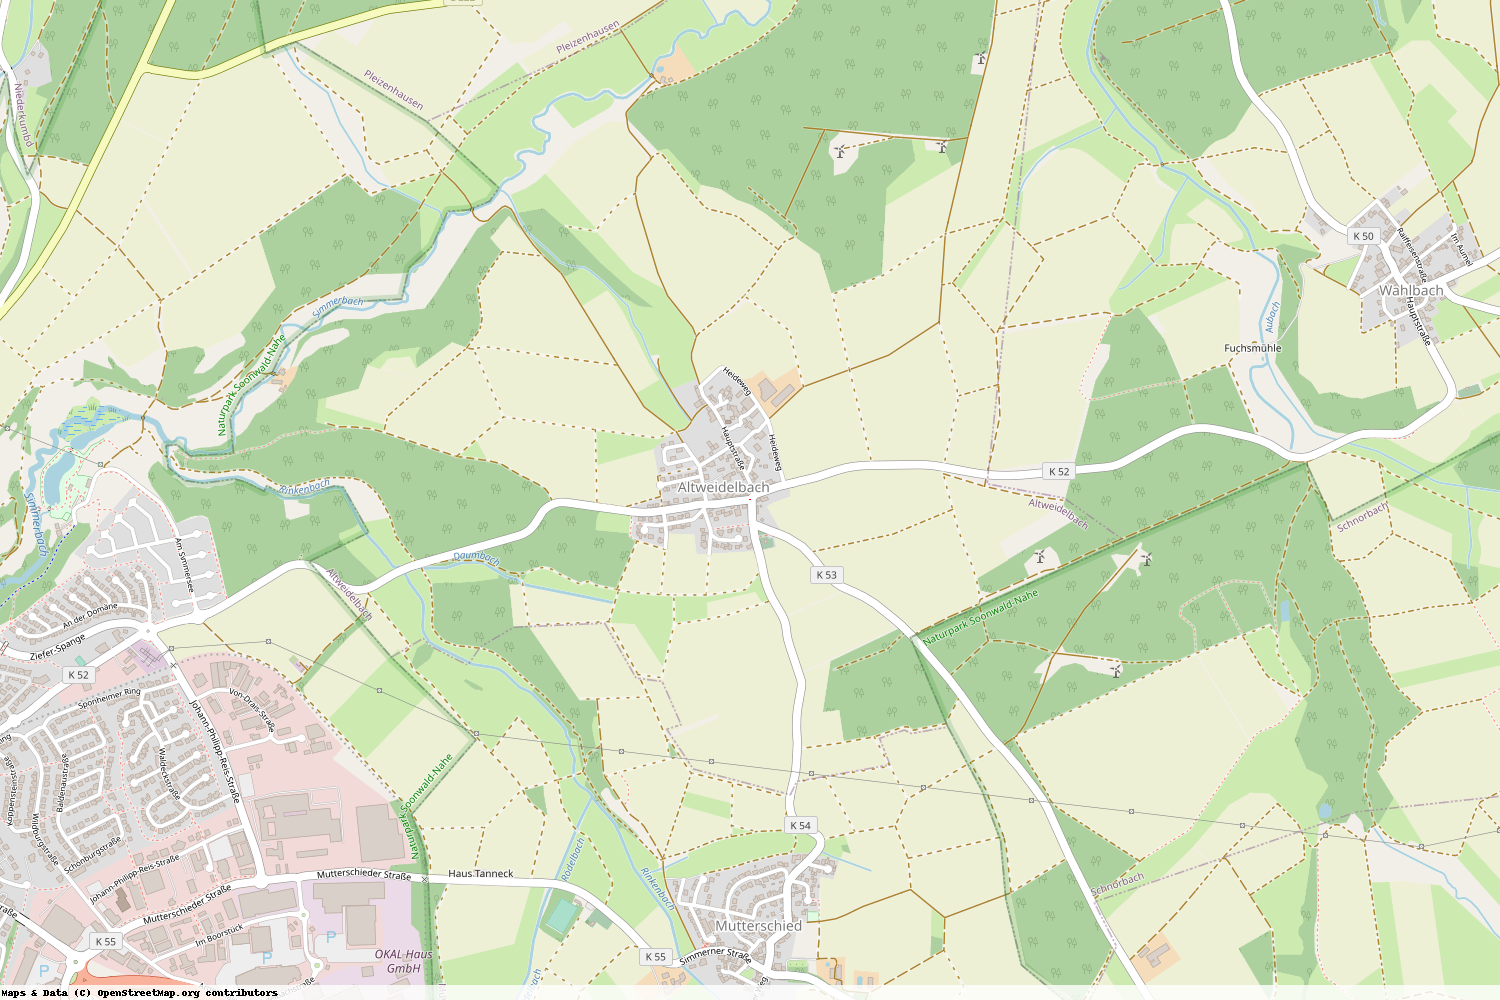 Ist gerade Stromausfall in Rheinland-Pfalz - Rhein-Hunsrück-Kreis - Altweidelbach?